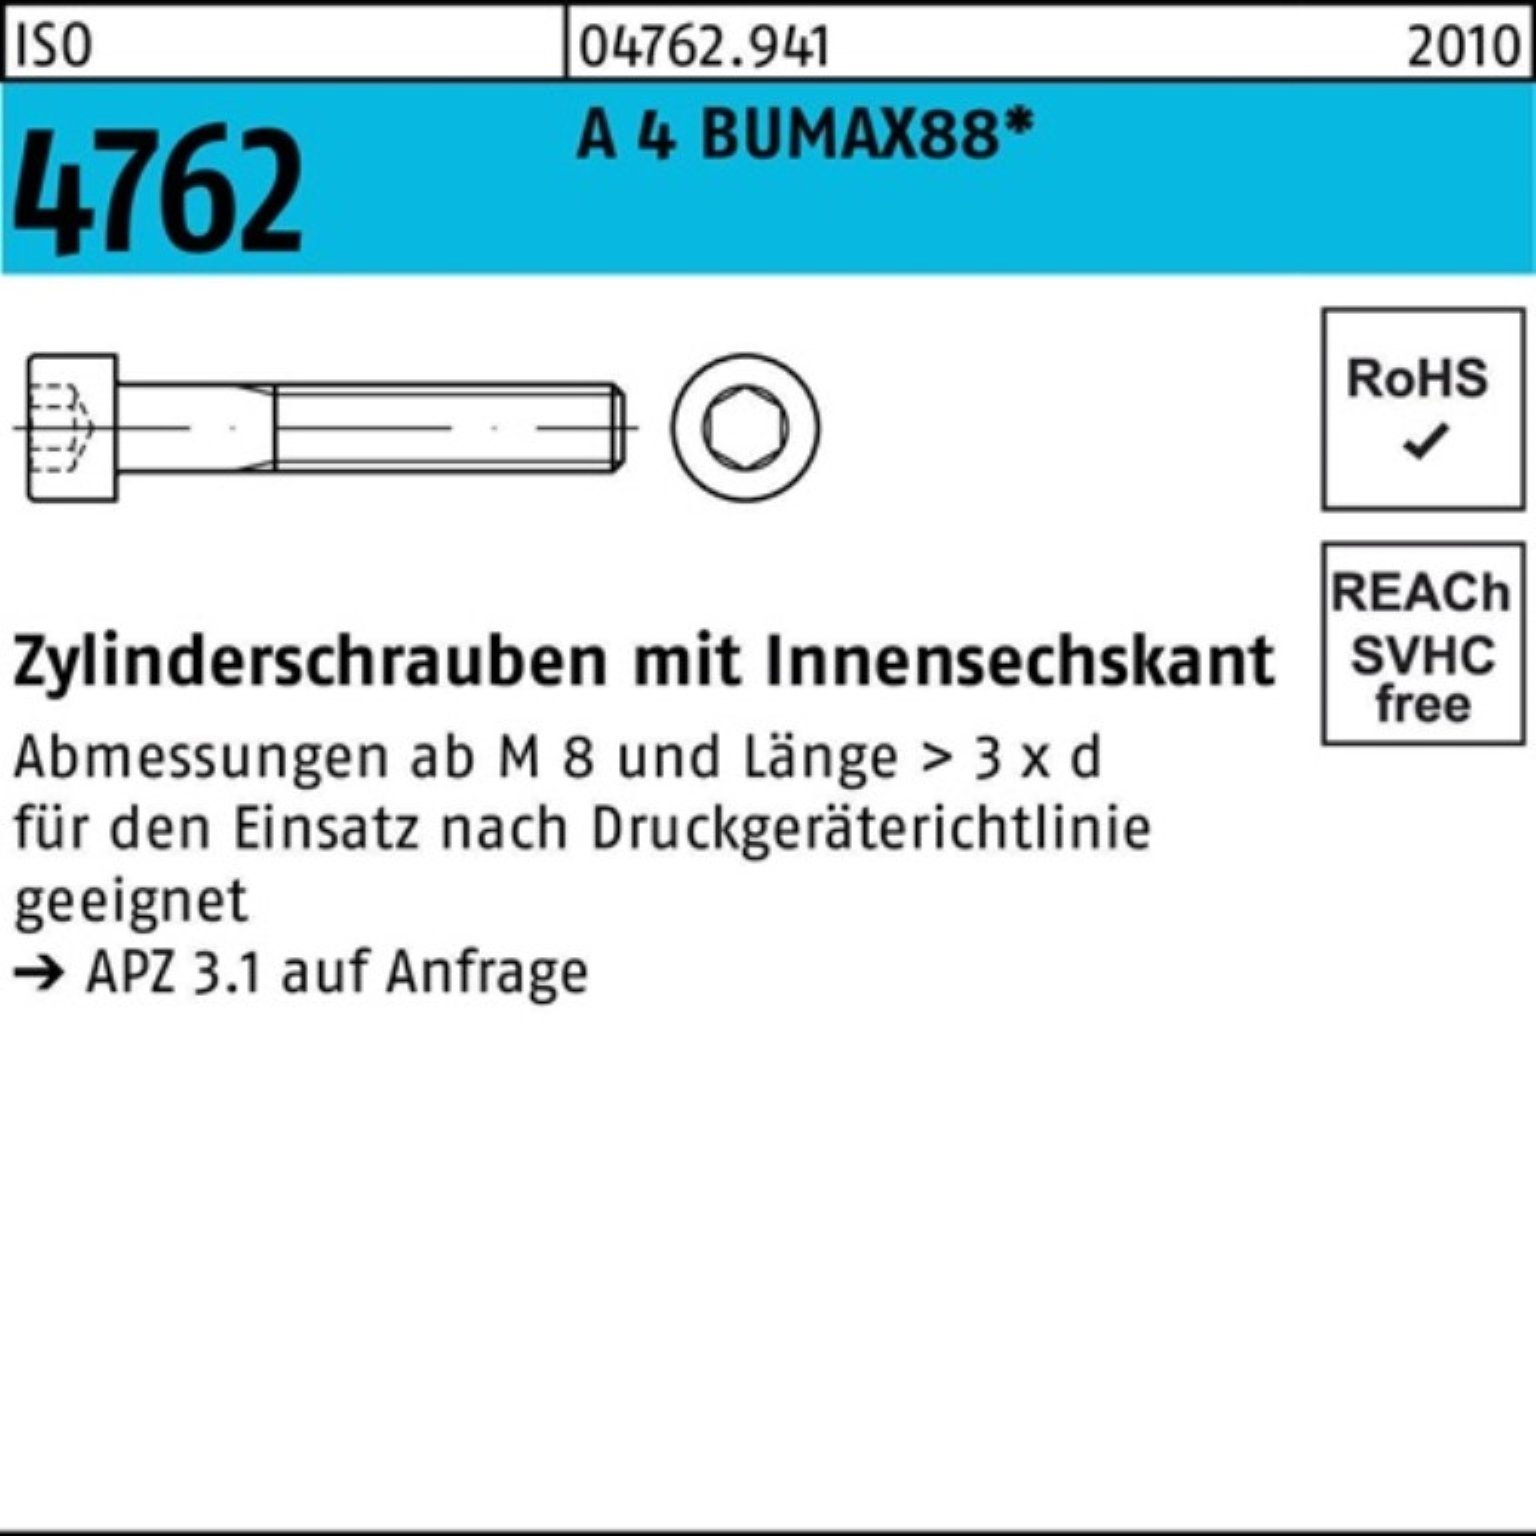 Bufab Zylinderschraube 100er Pack Zylinderschraube ISO 4762 Innen-6kt M12x 35 A 4 BUMAX88 25